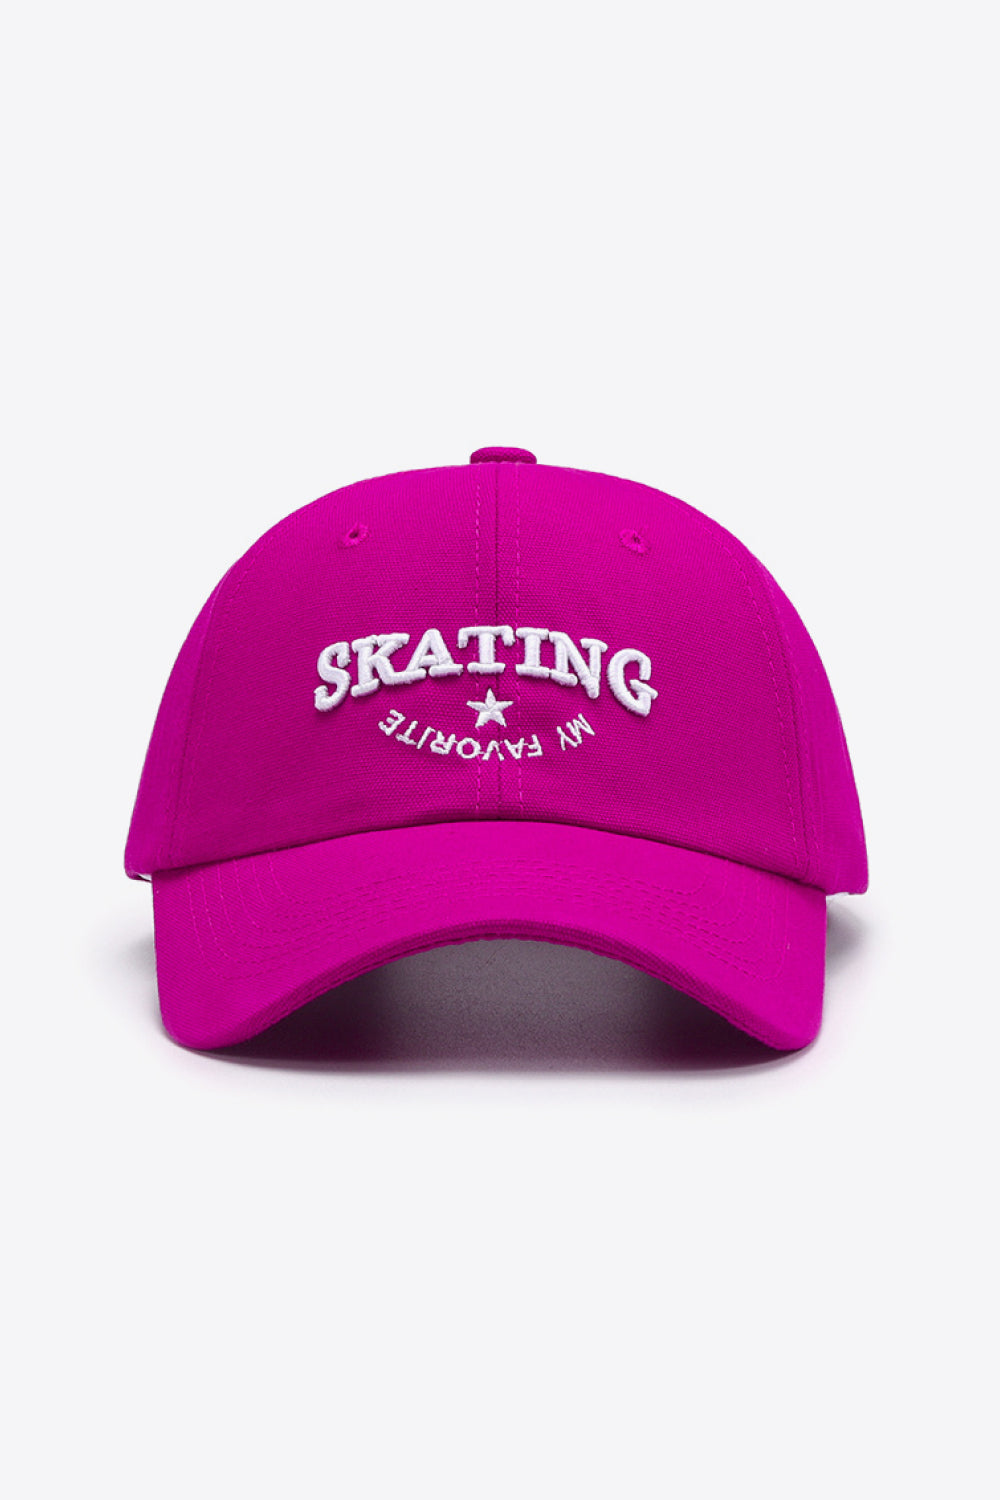 skating-letter-embroidery-baseball-cap